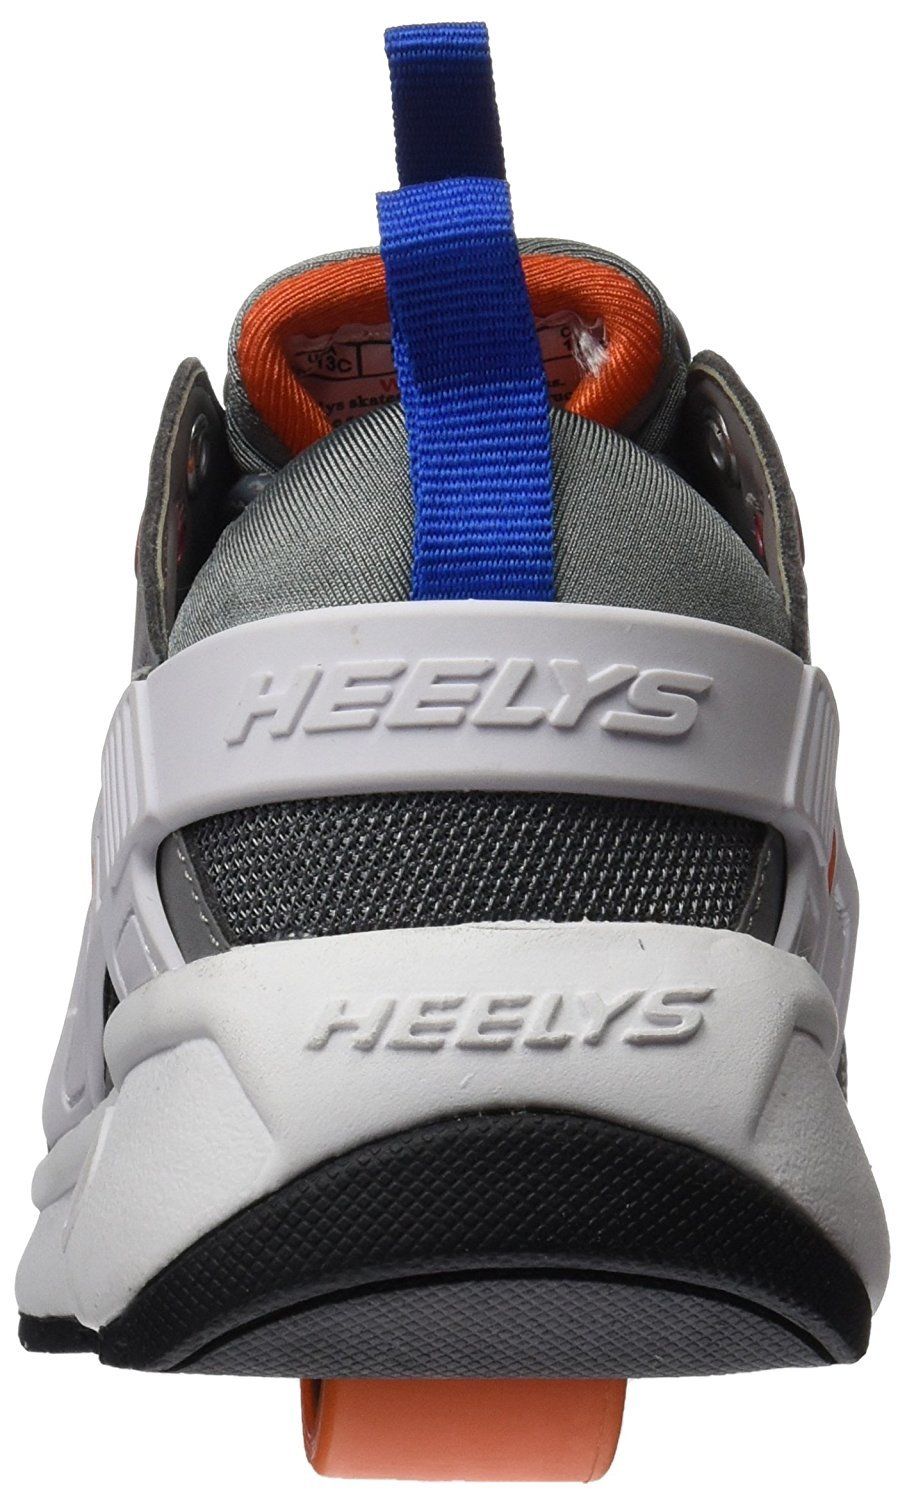 Heelys Force Men's skate shoes Grey white orange